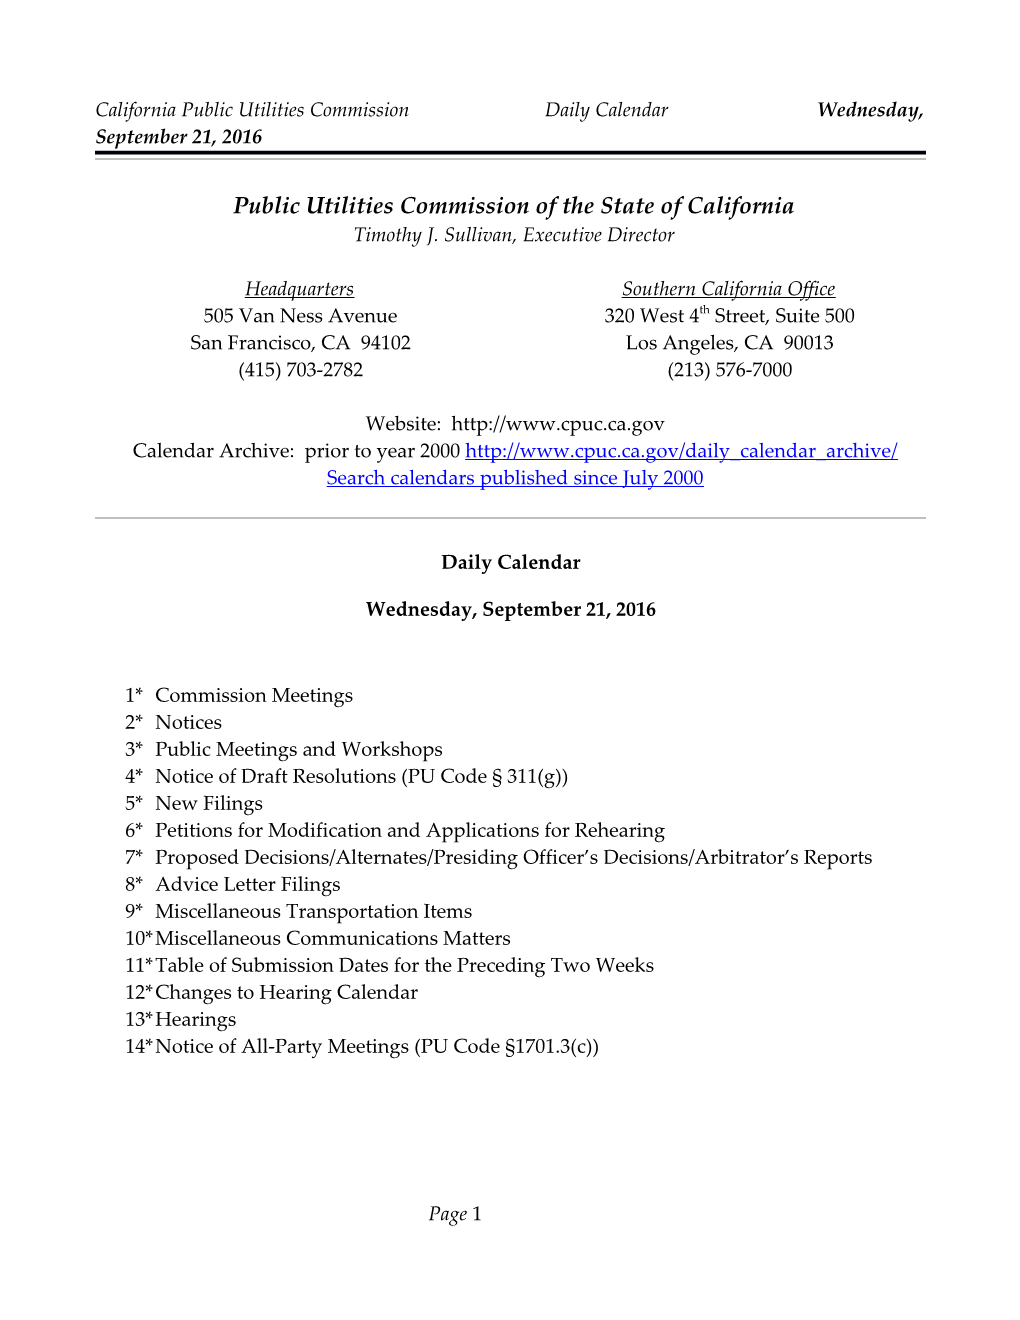 California Public Utilities Commission Daily Calendar Wednesday, September 21, 2016